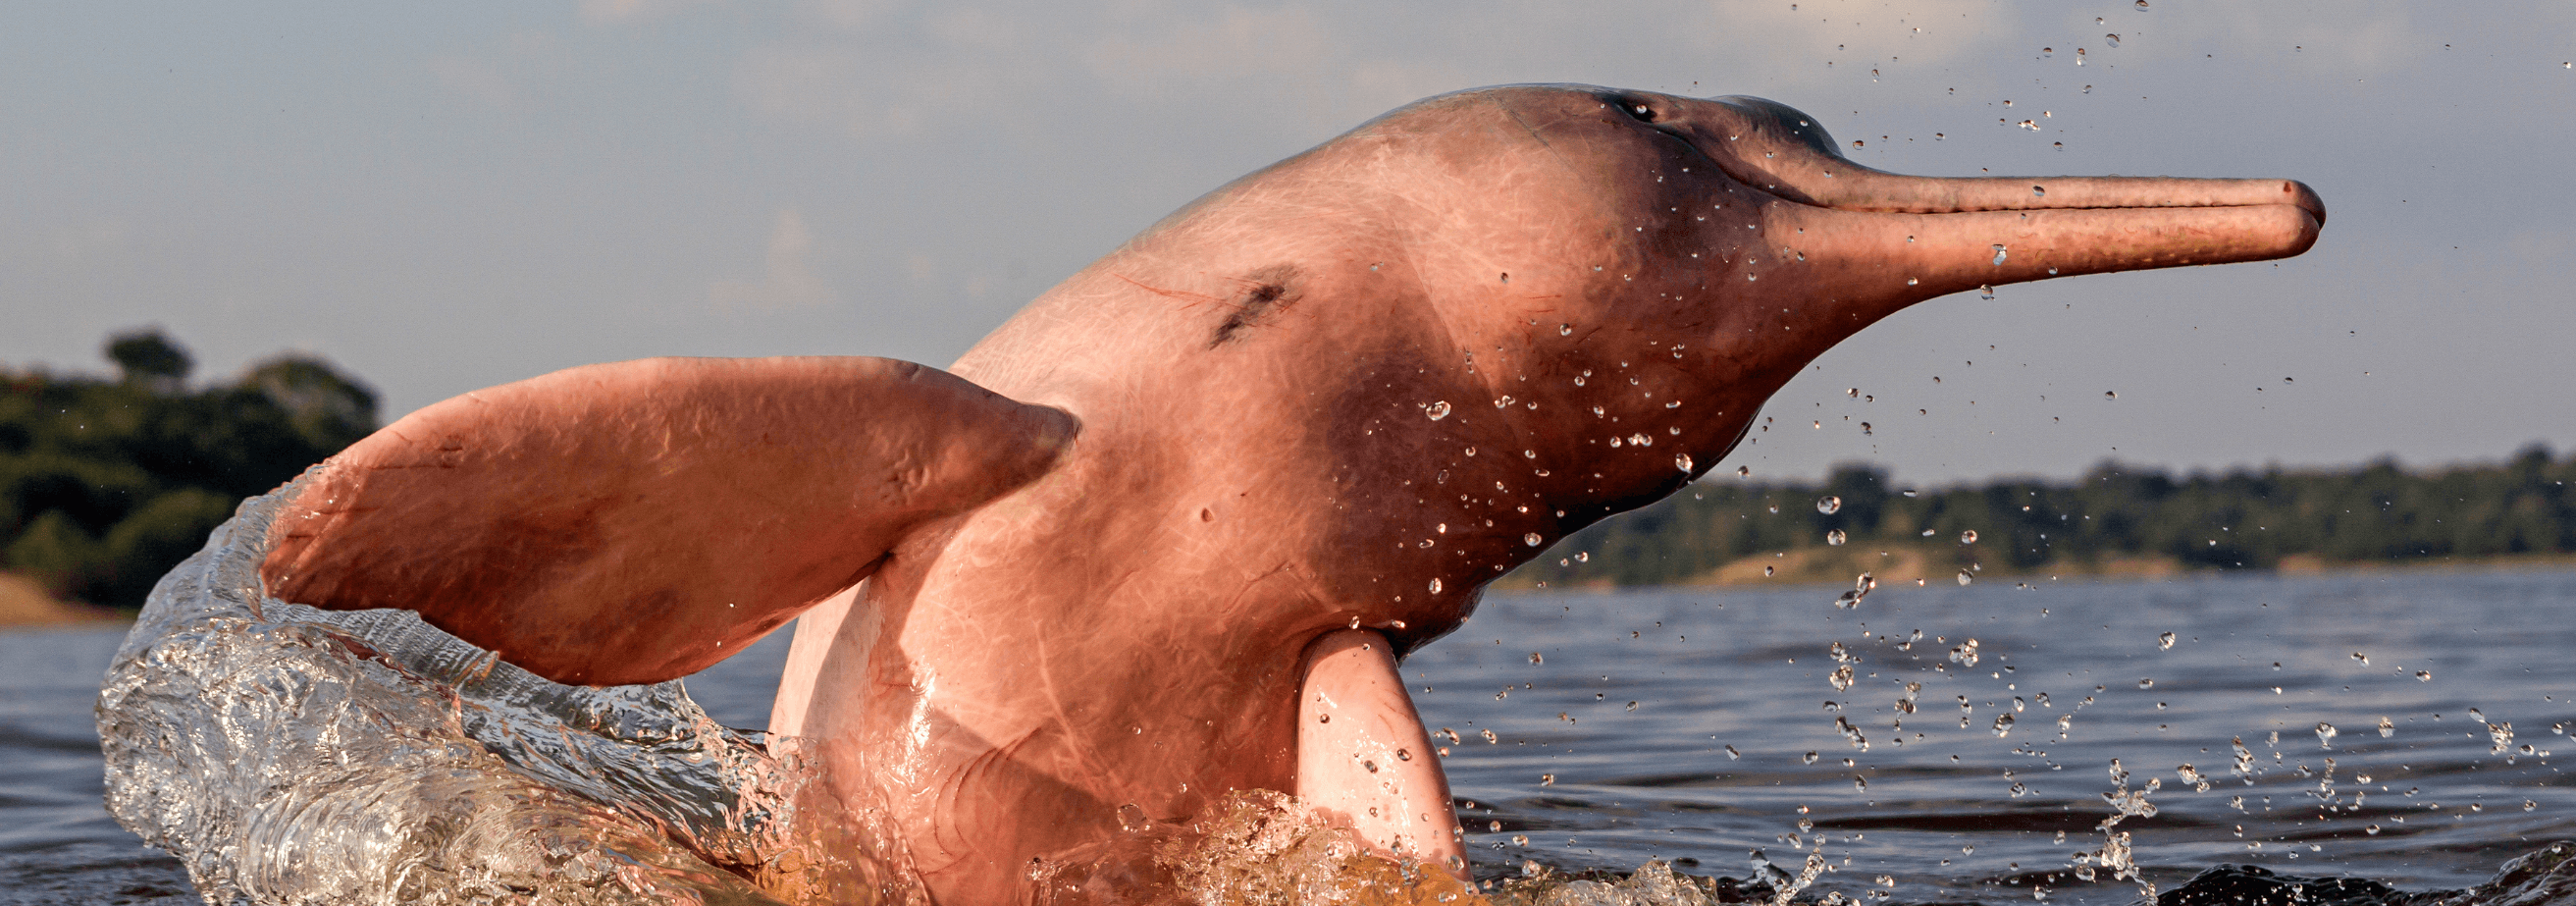 Saving Amazon River Dolphins